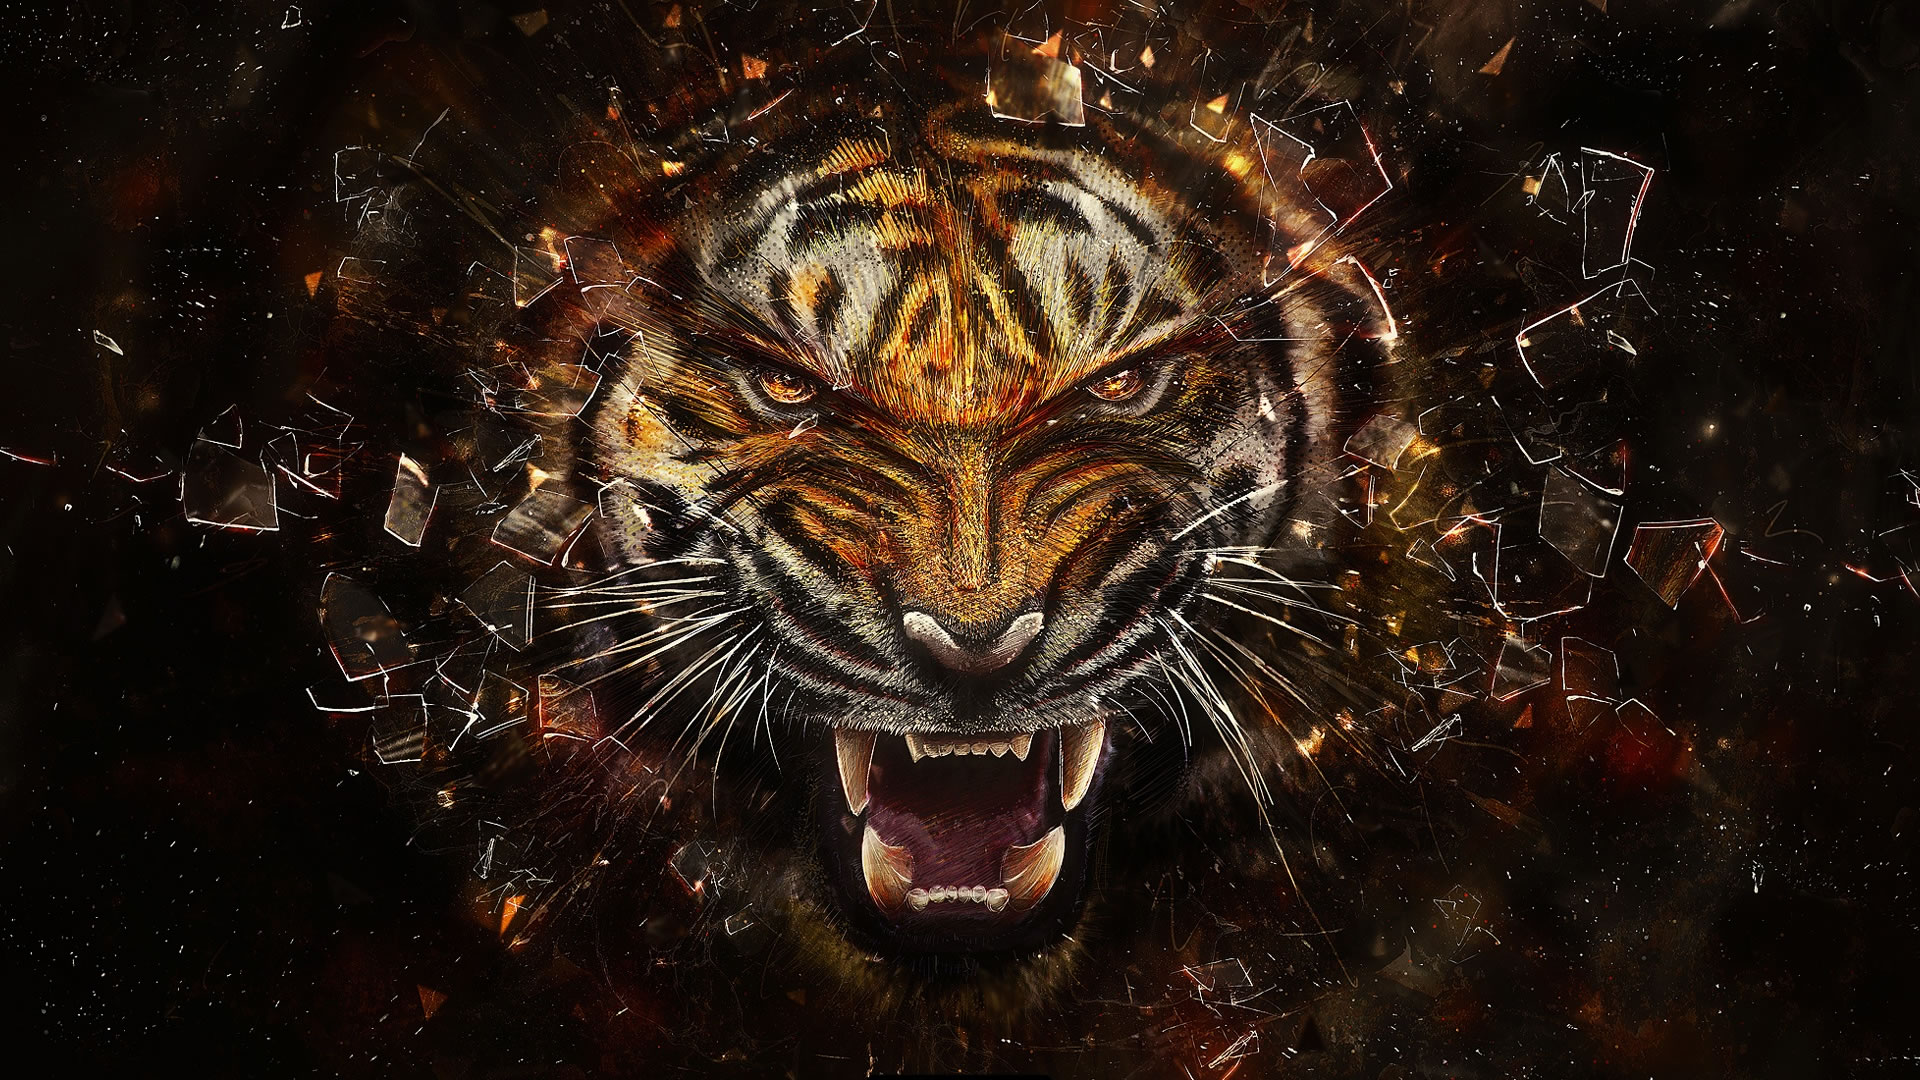 Cool Tiger Design